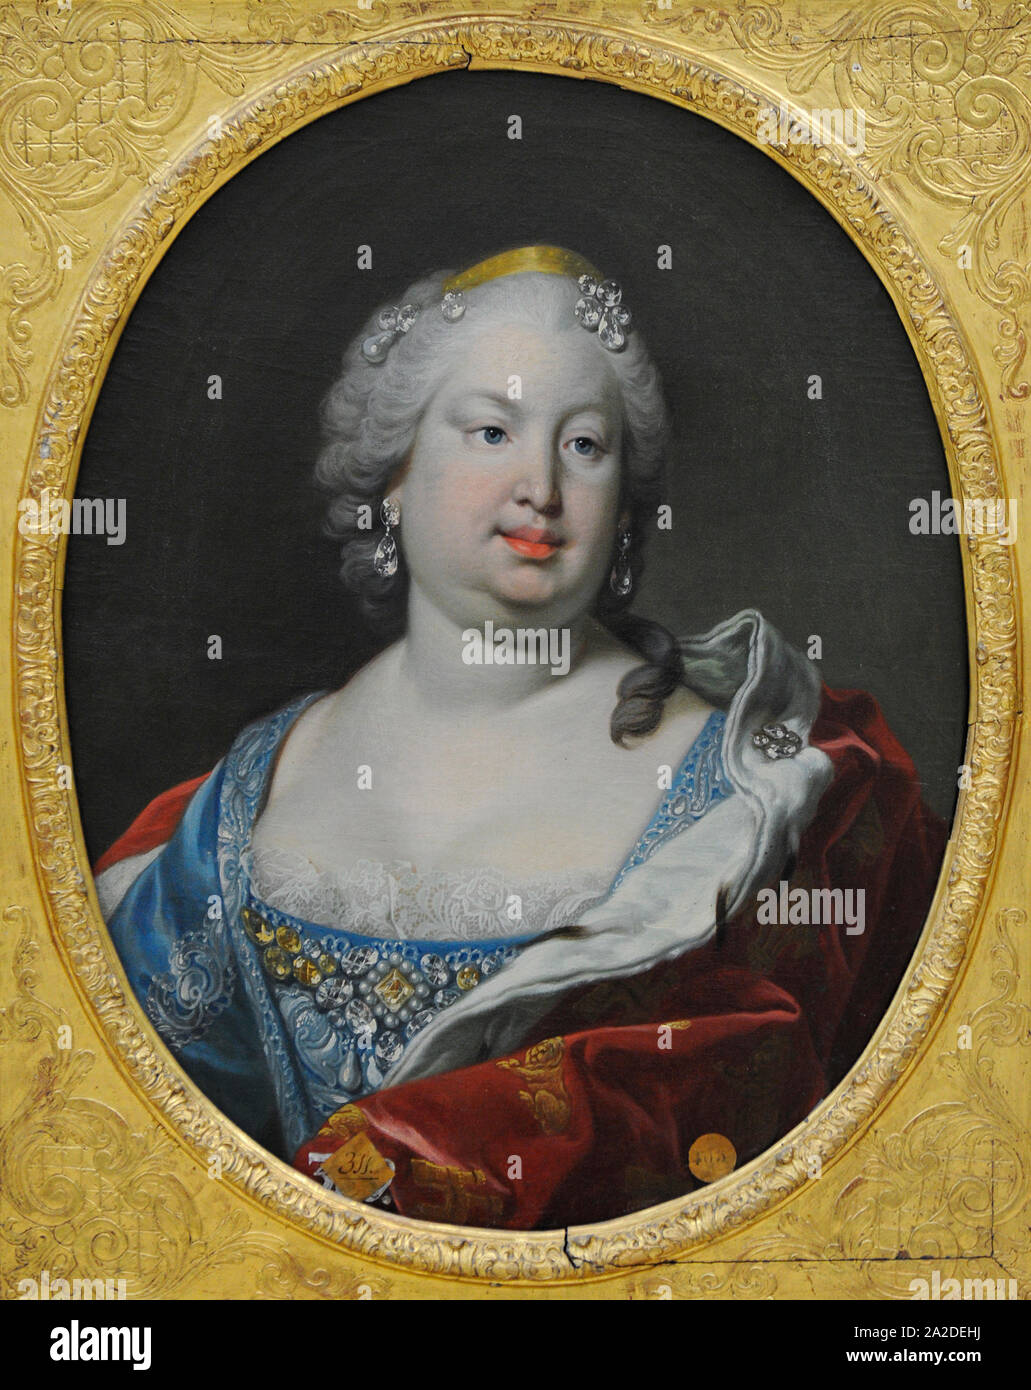 Barbara of Portugal (1711-1758). Queen of Spain, spouse of Ferdinand VI. Portrait by Louis Michel Van Loo (1707-1771). San Fernando Royal Academy of Fine Arts. Madrid. Spain. Stock Photo